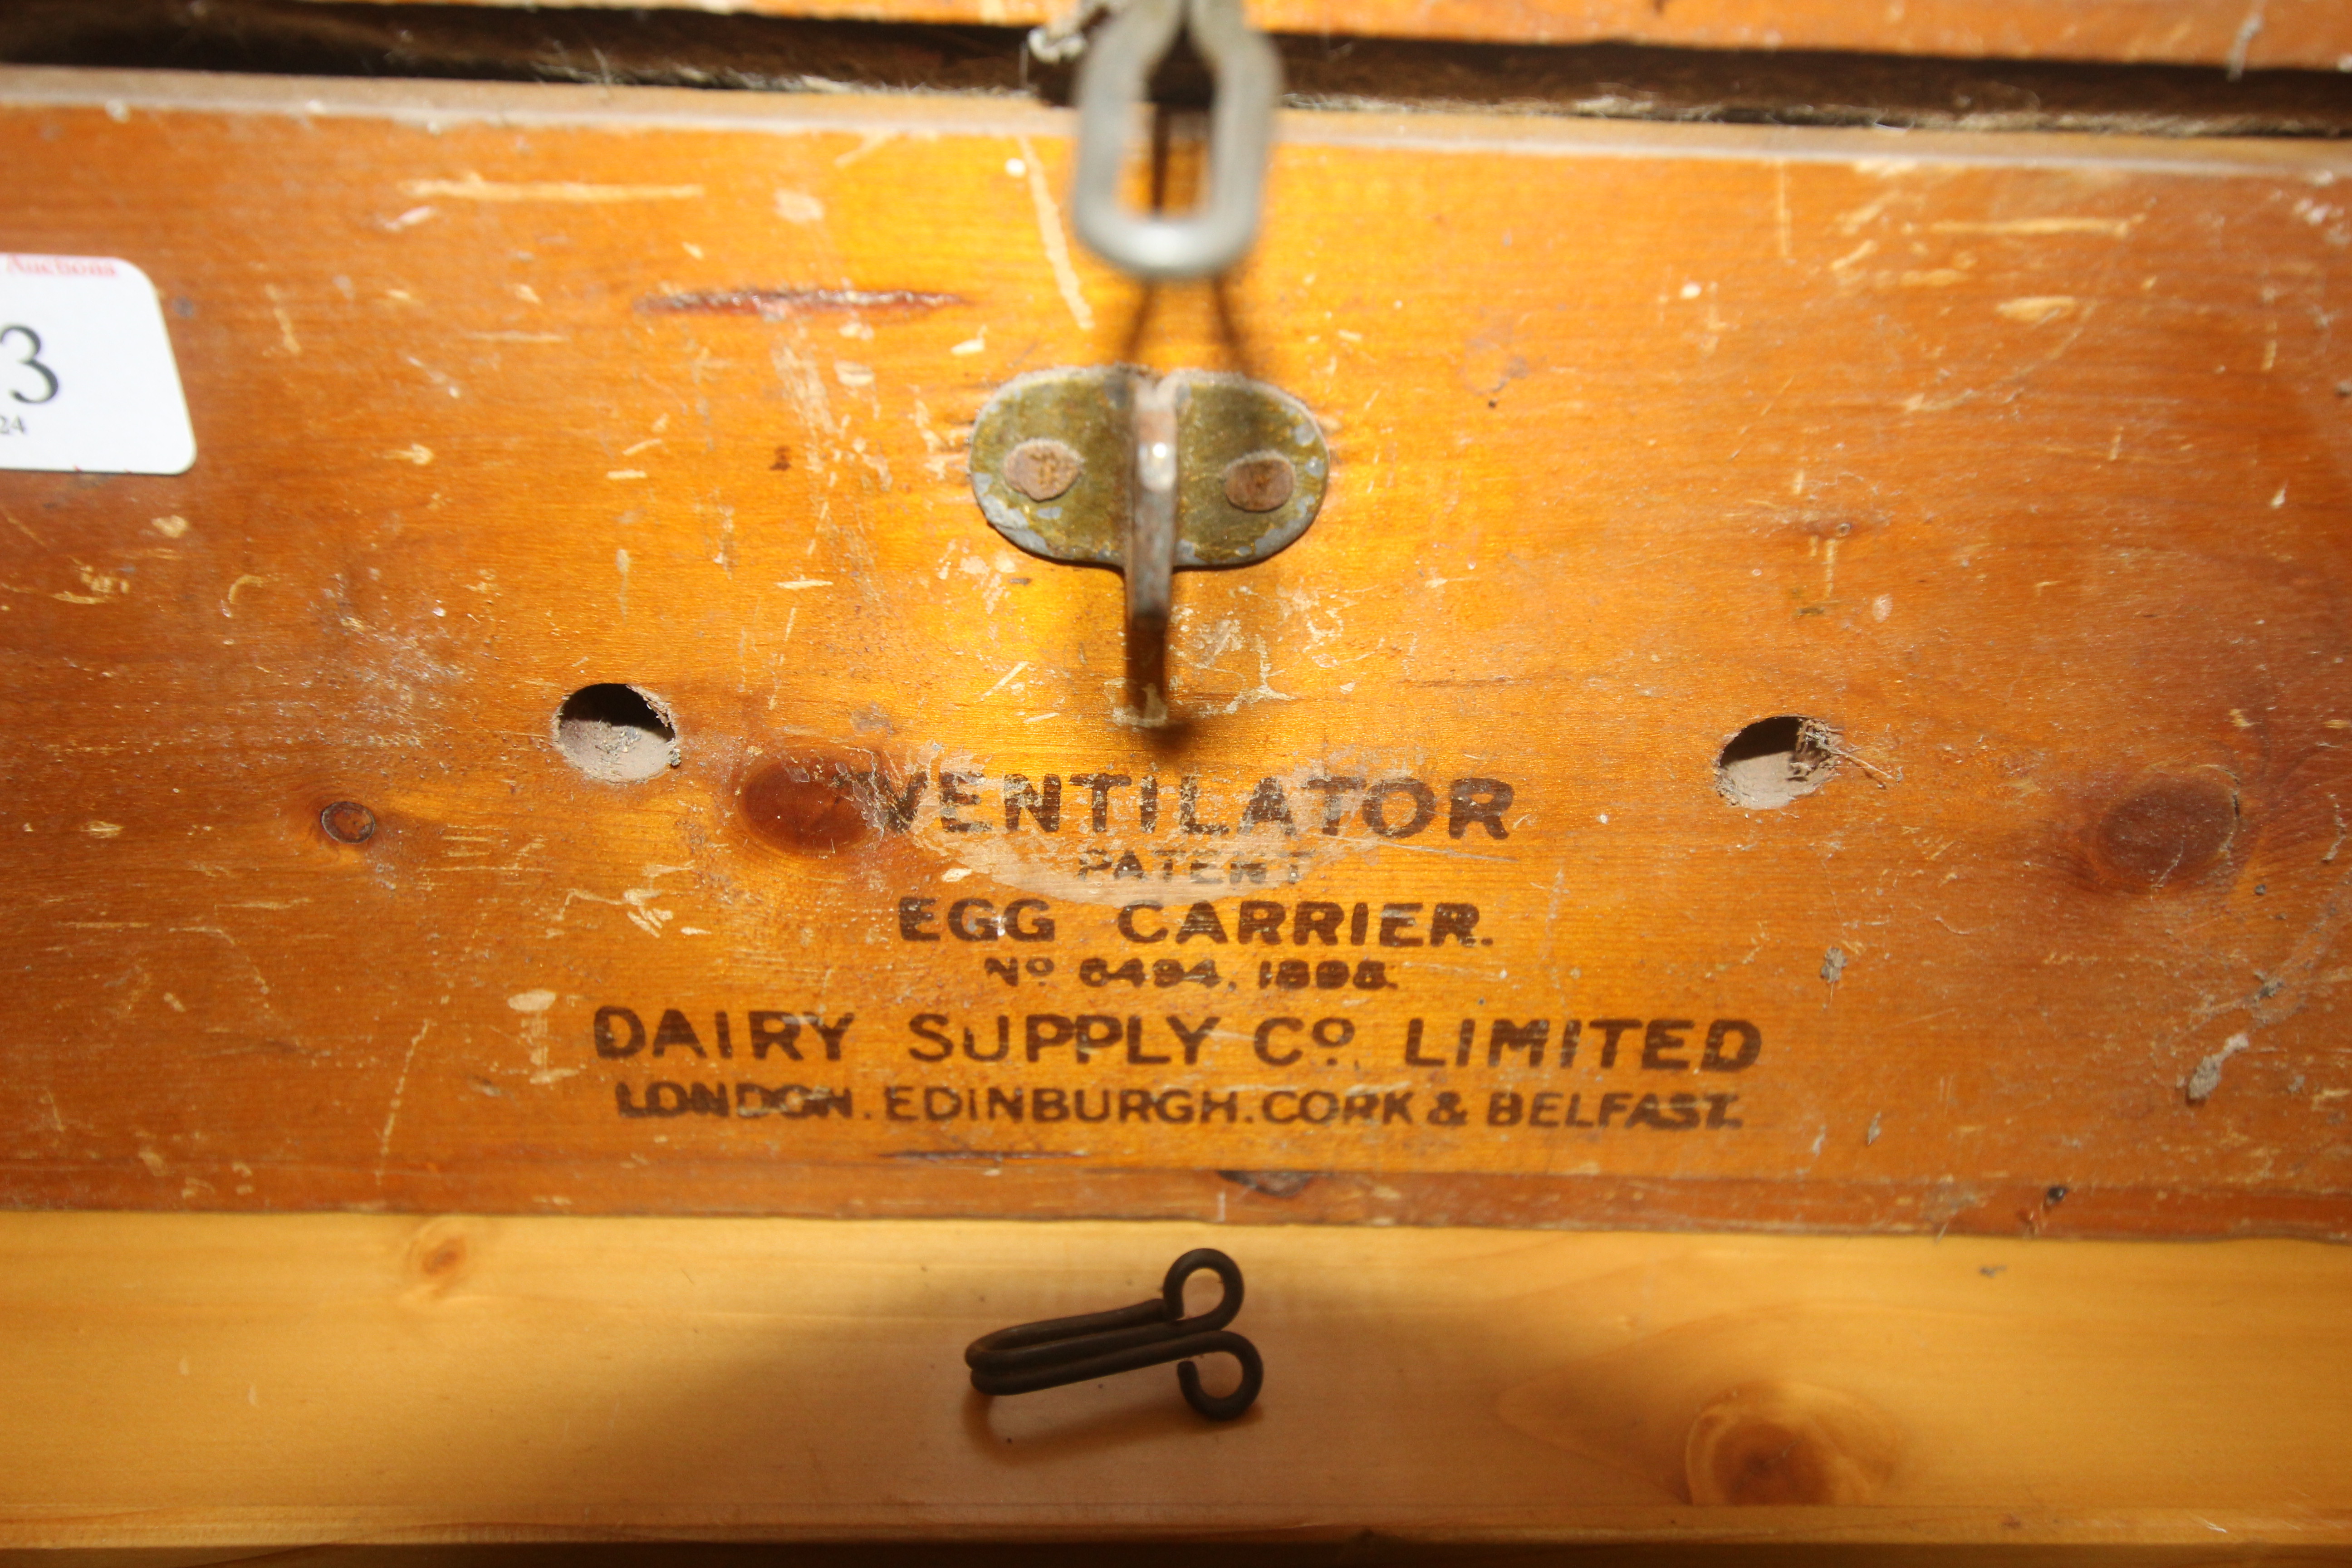 A ventilator egg carrier 'Dairy Supply Co Ltd Lond - Image 2 of 3